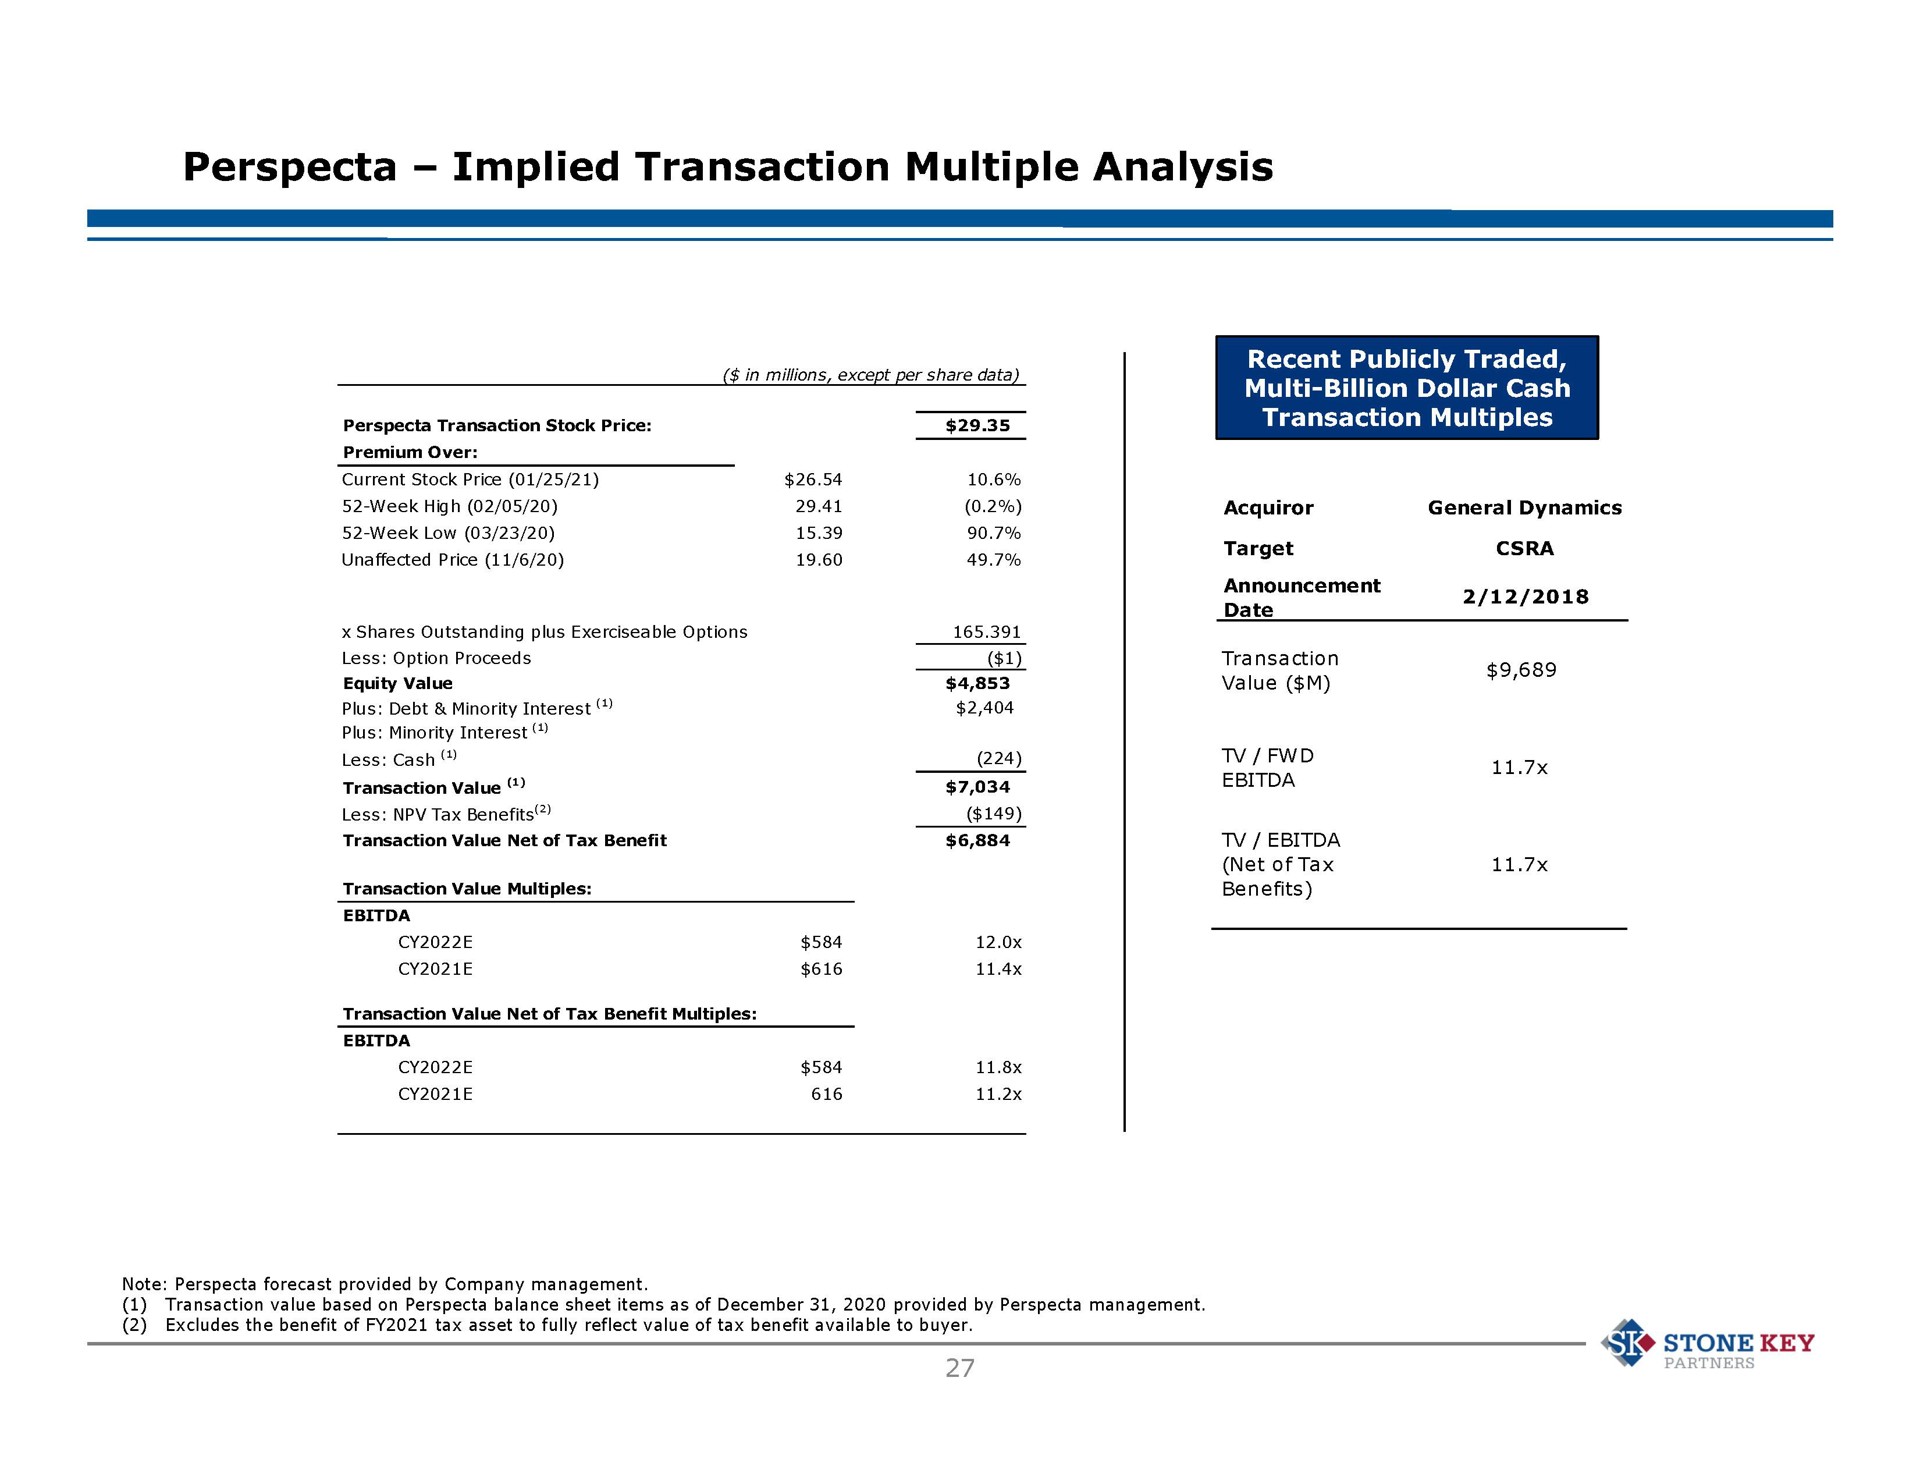 implied transaction multiple analysis billion dollar cash stone key partner | Stone Key Partners